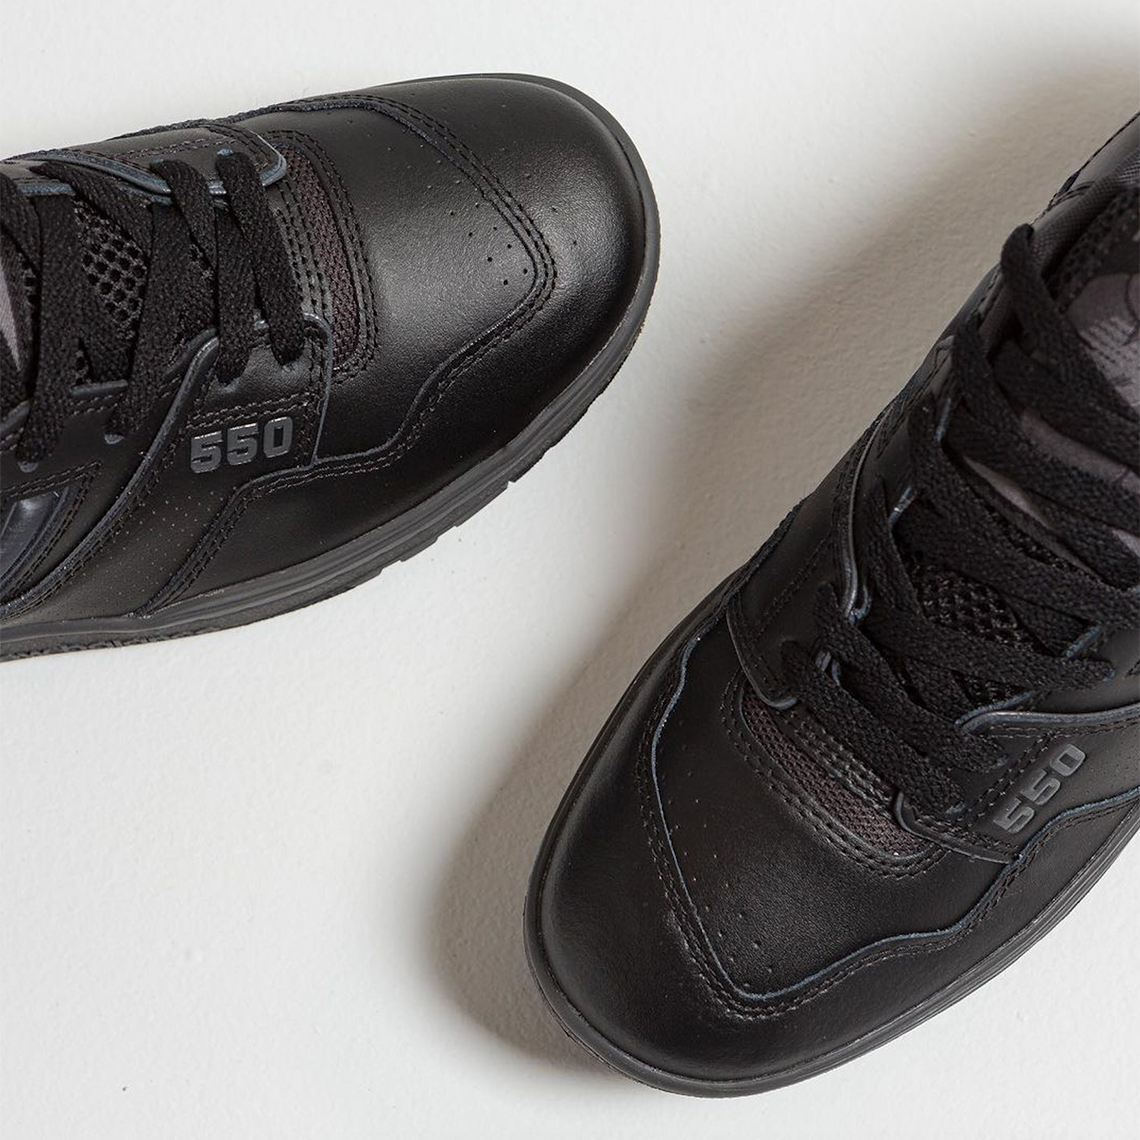 New Balance 550 sneakers in triple black